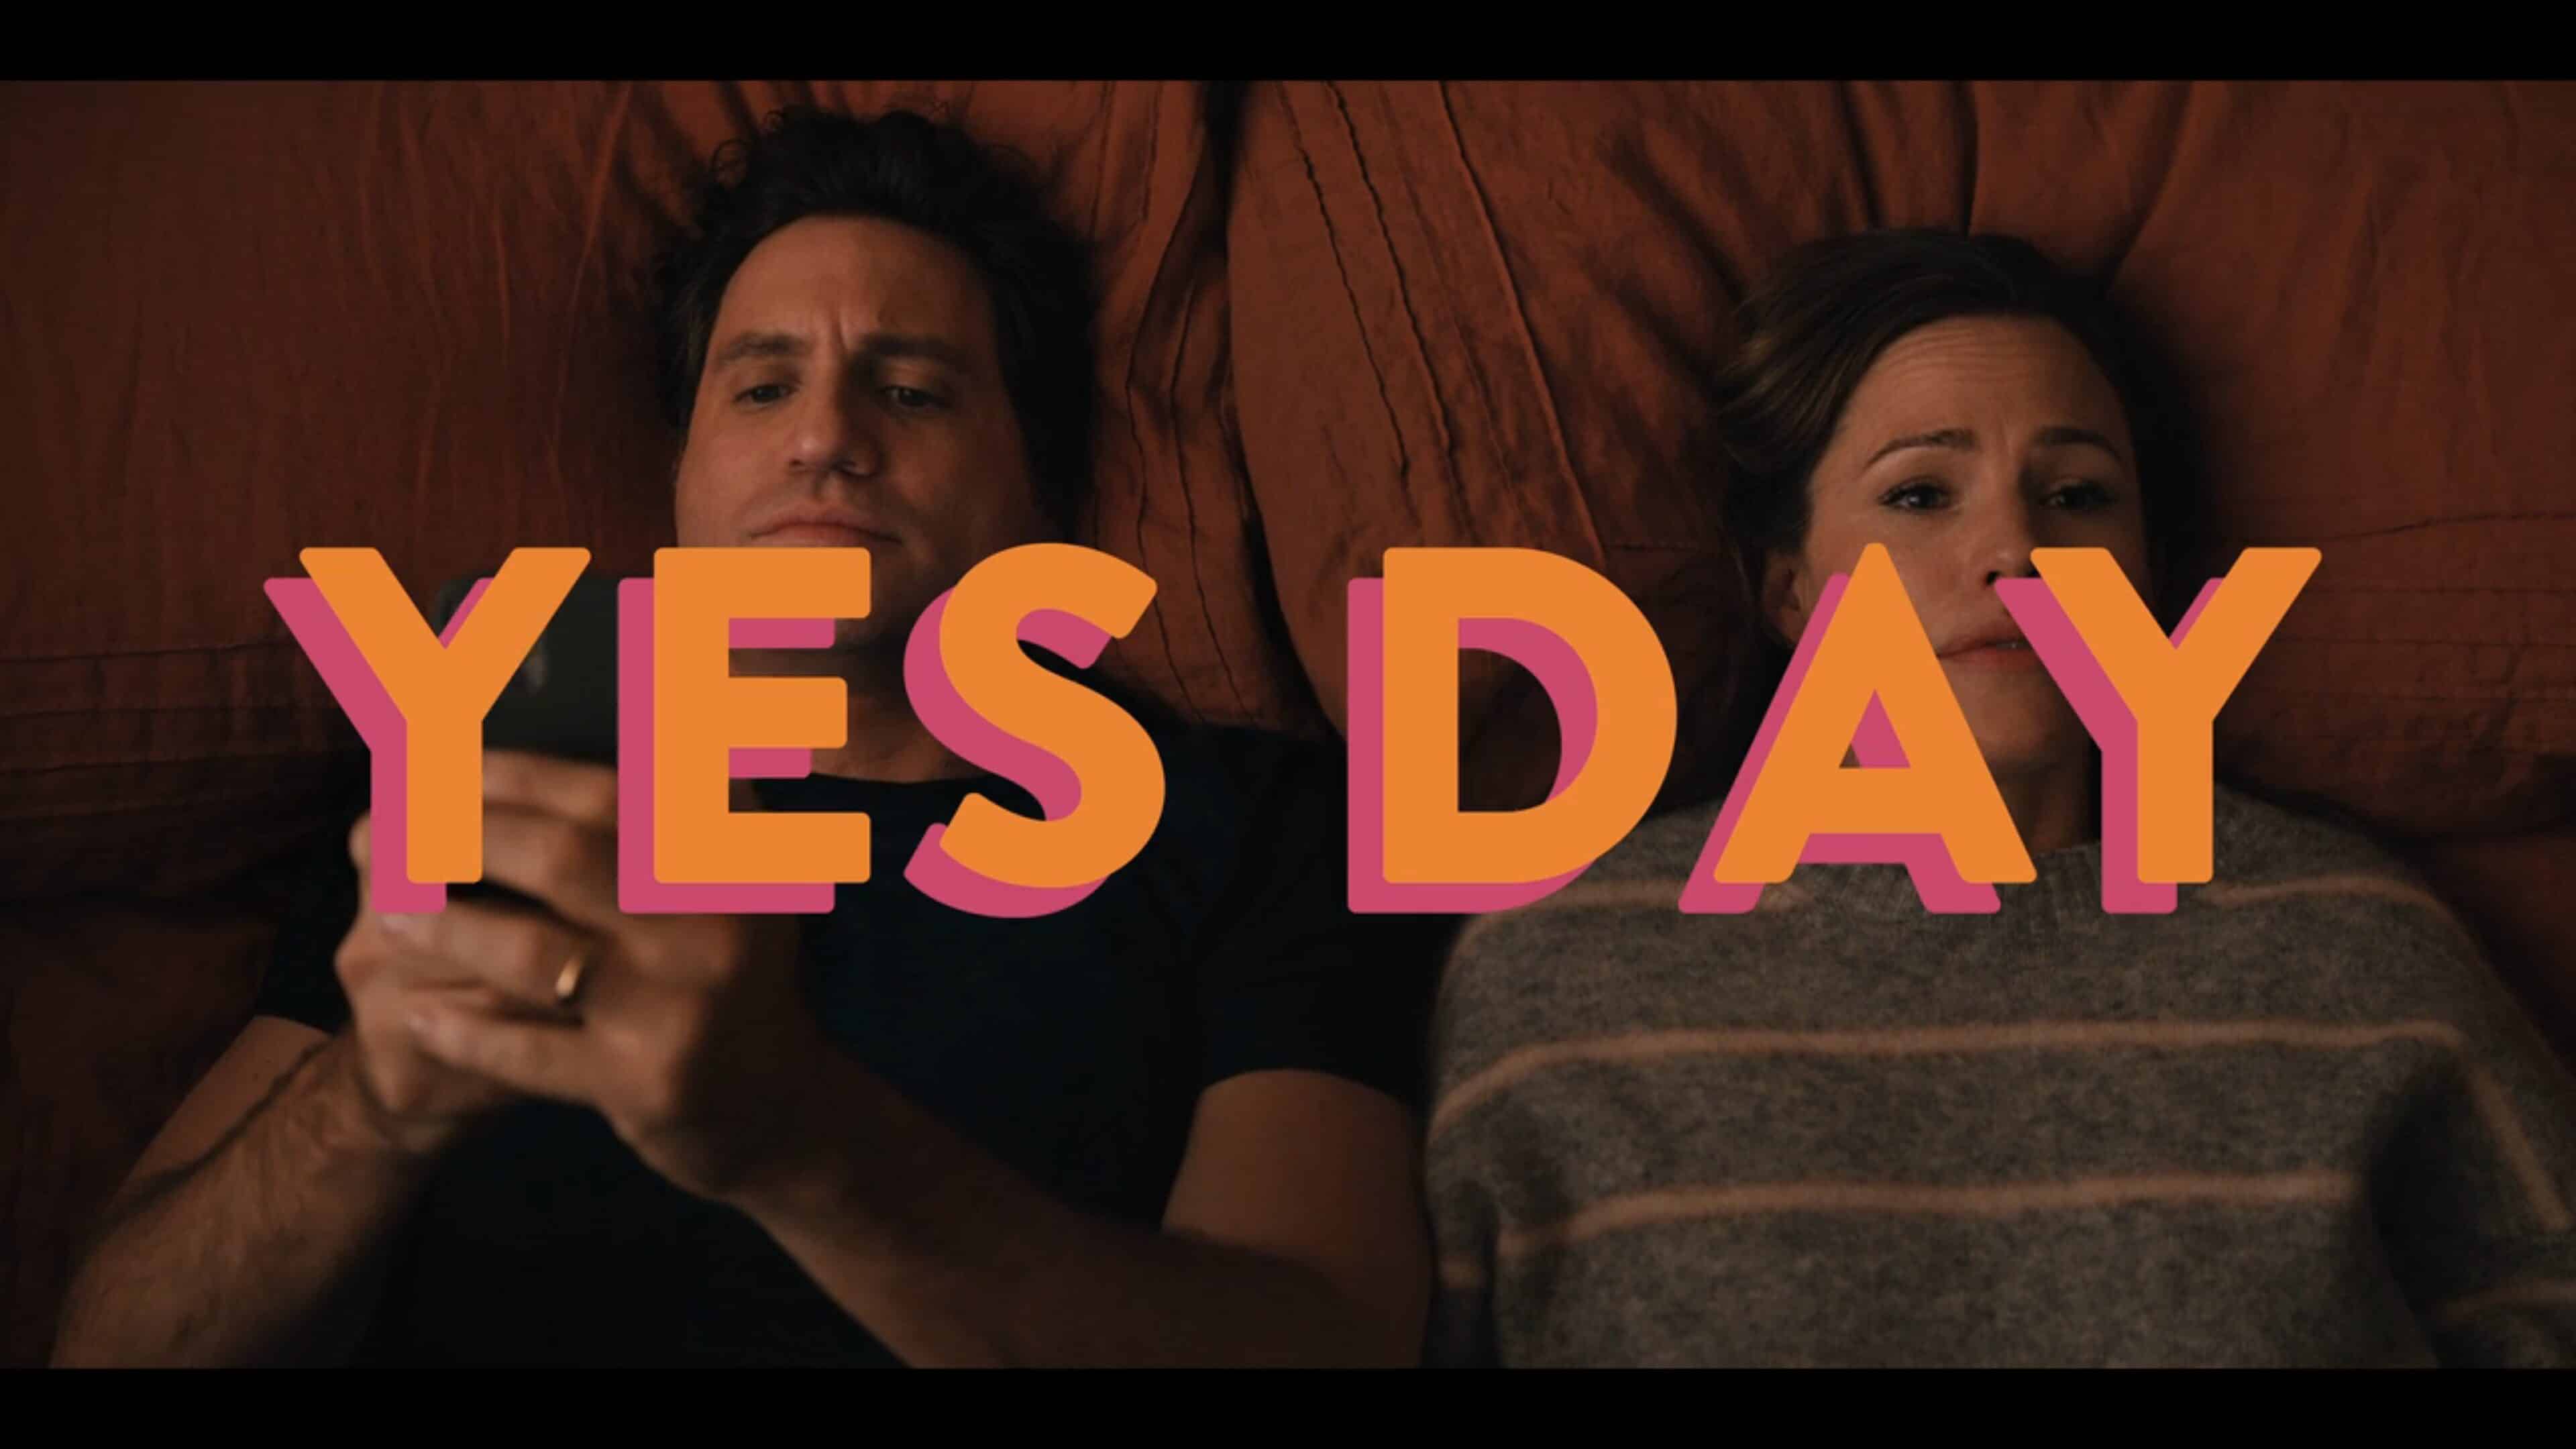 Carlos (Edgar Ramirez) and Allison (Jennifer Garner) on the bed, with Carlos on his phone